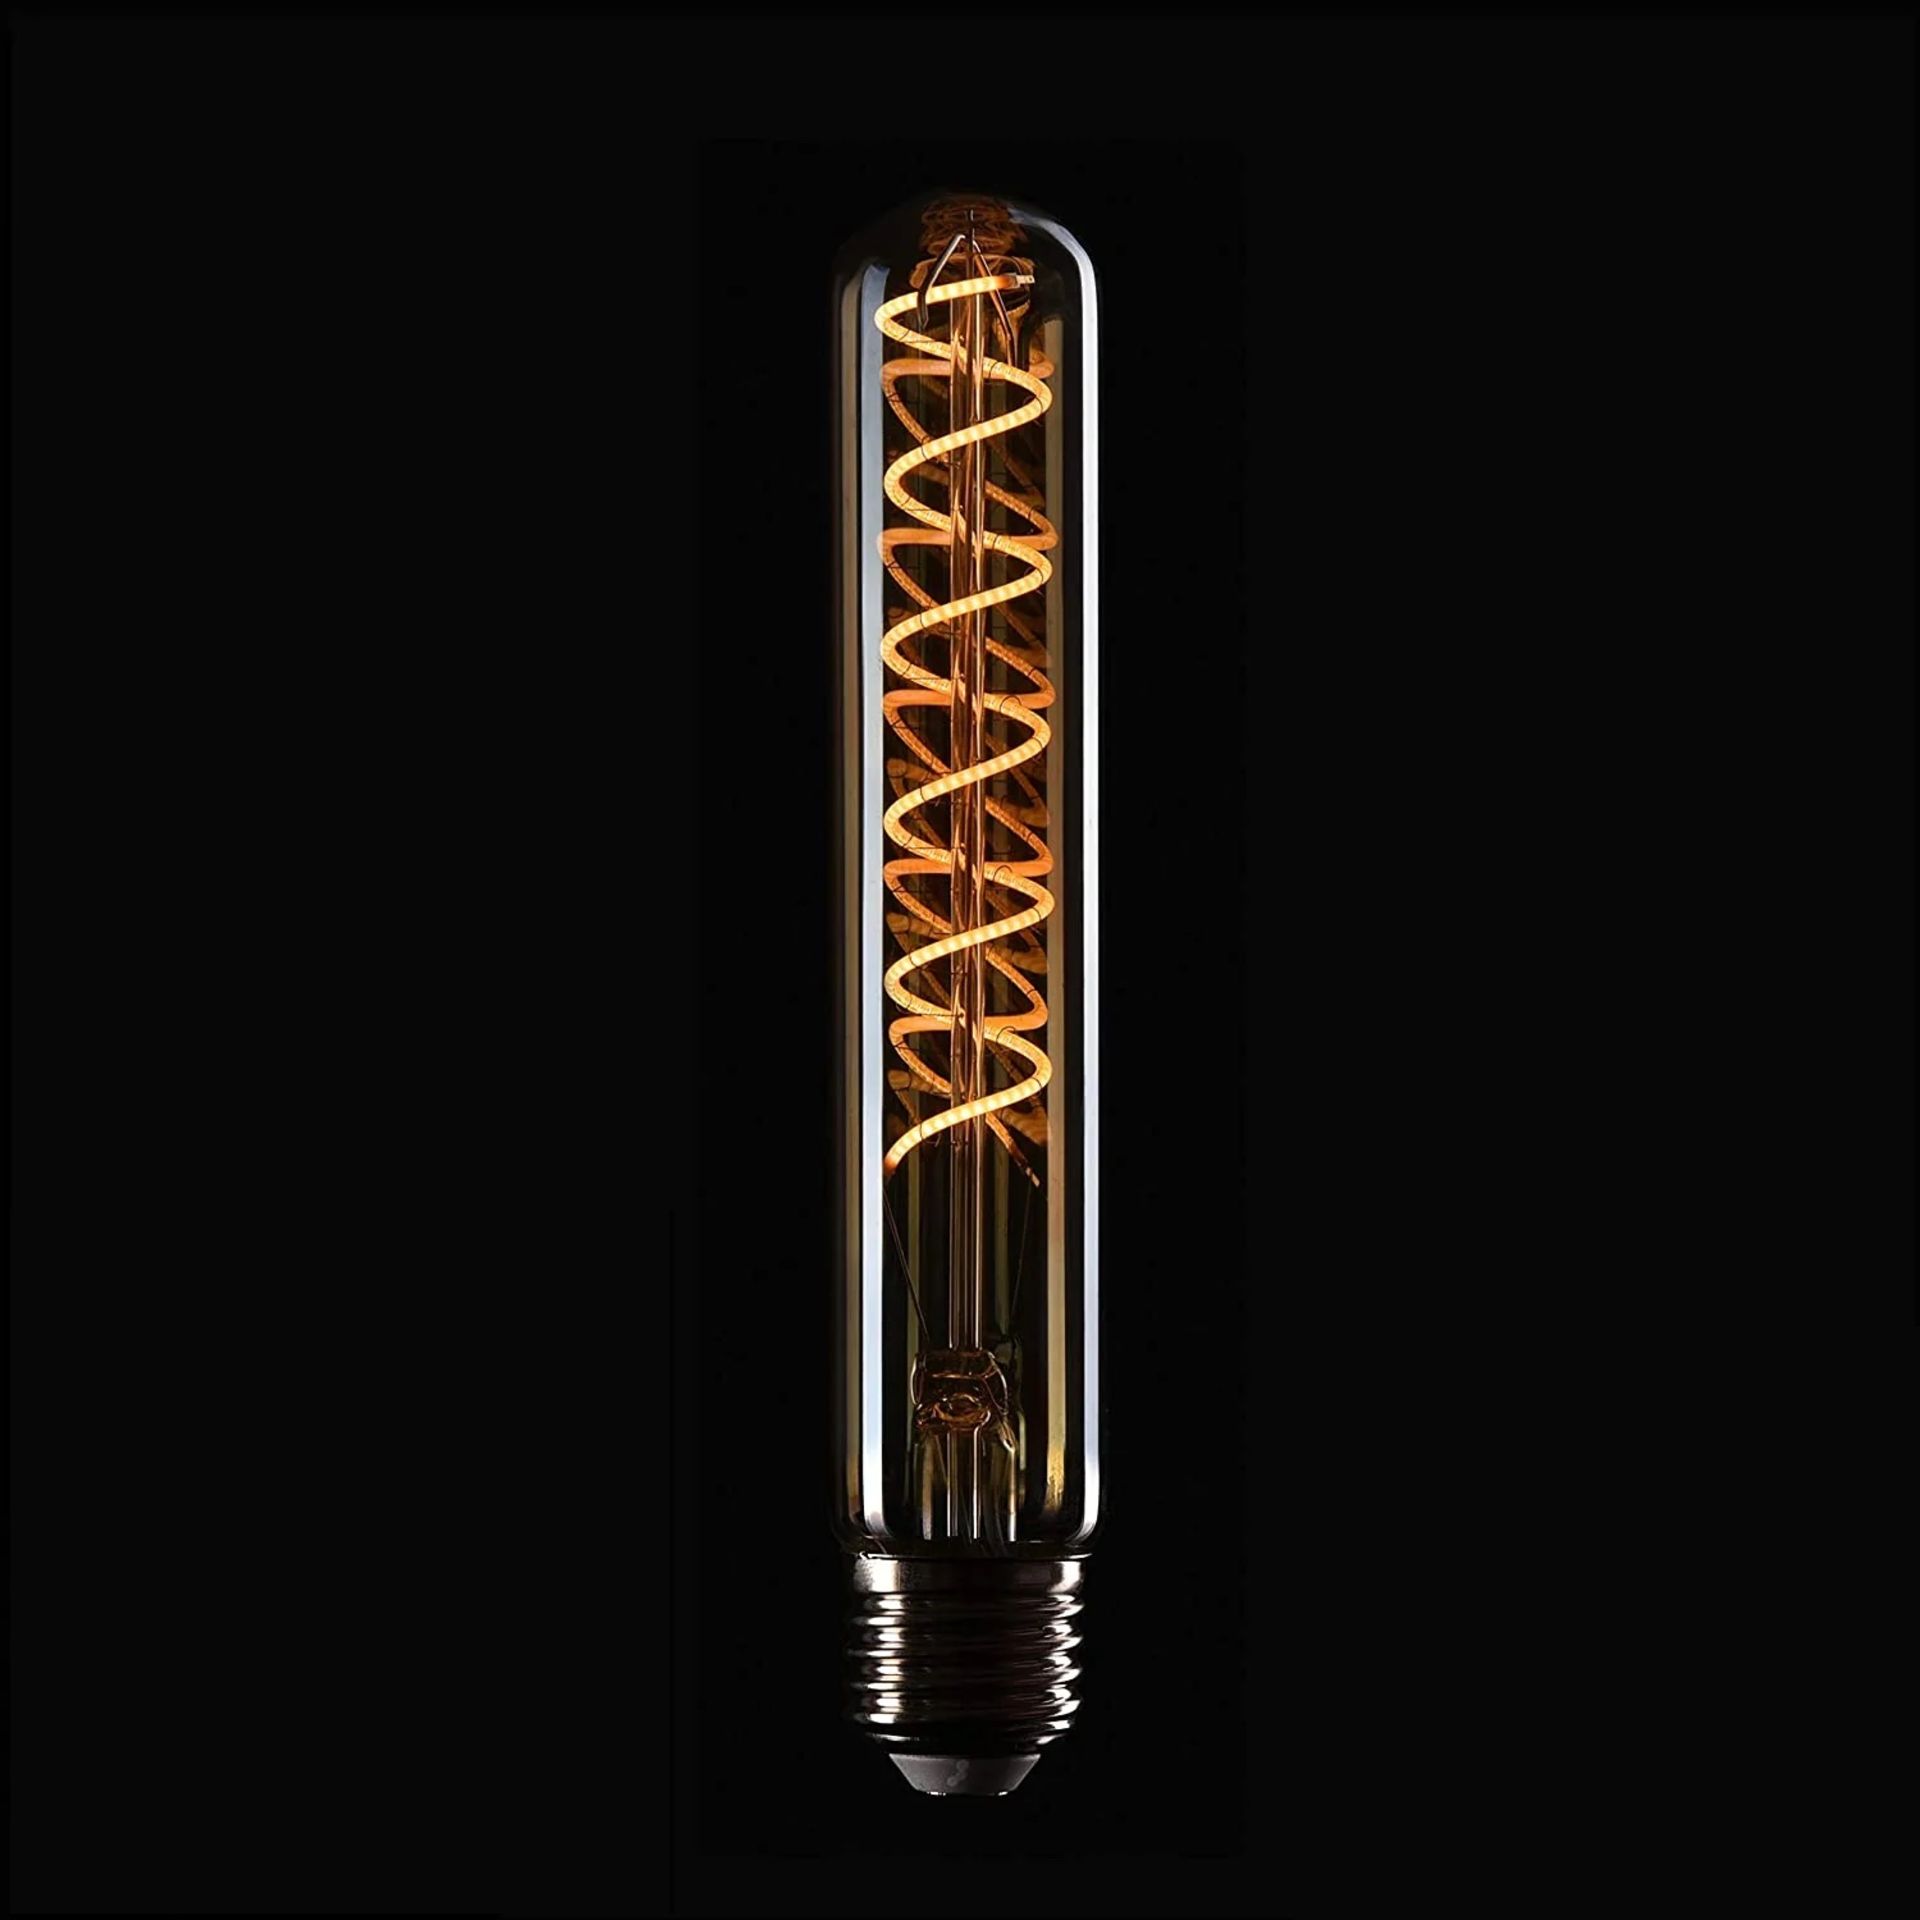 12 x CROWN LED Edison Flat Pipe Lightbulb 4W/40W Warm White - NEW & BOXED - BIG RRP! - Image 4 of 8